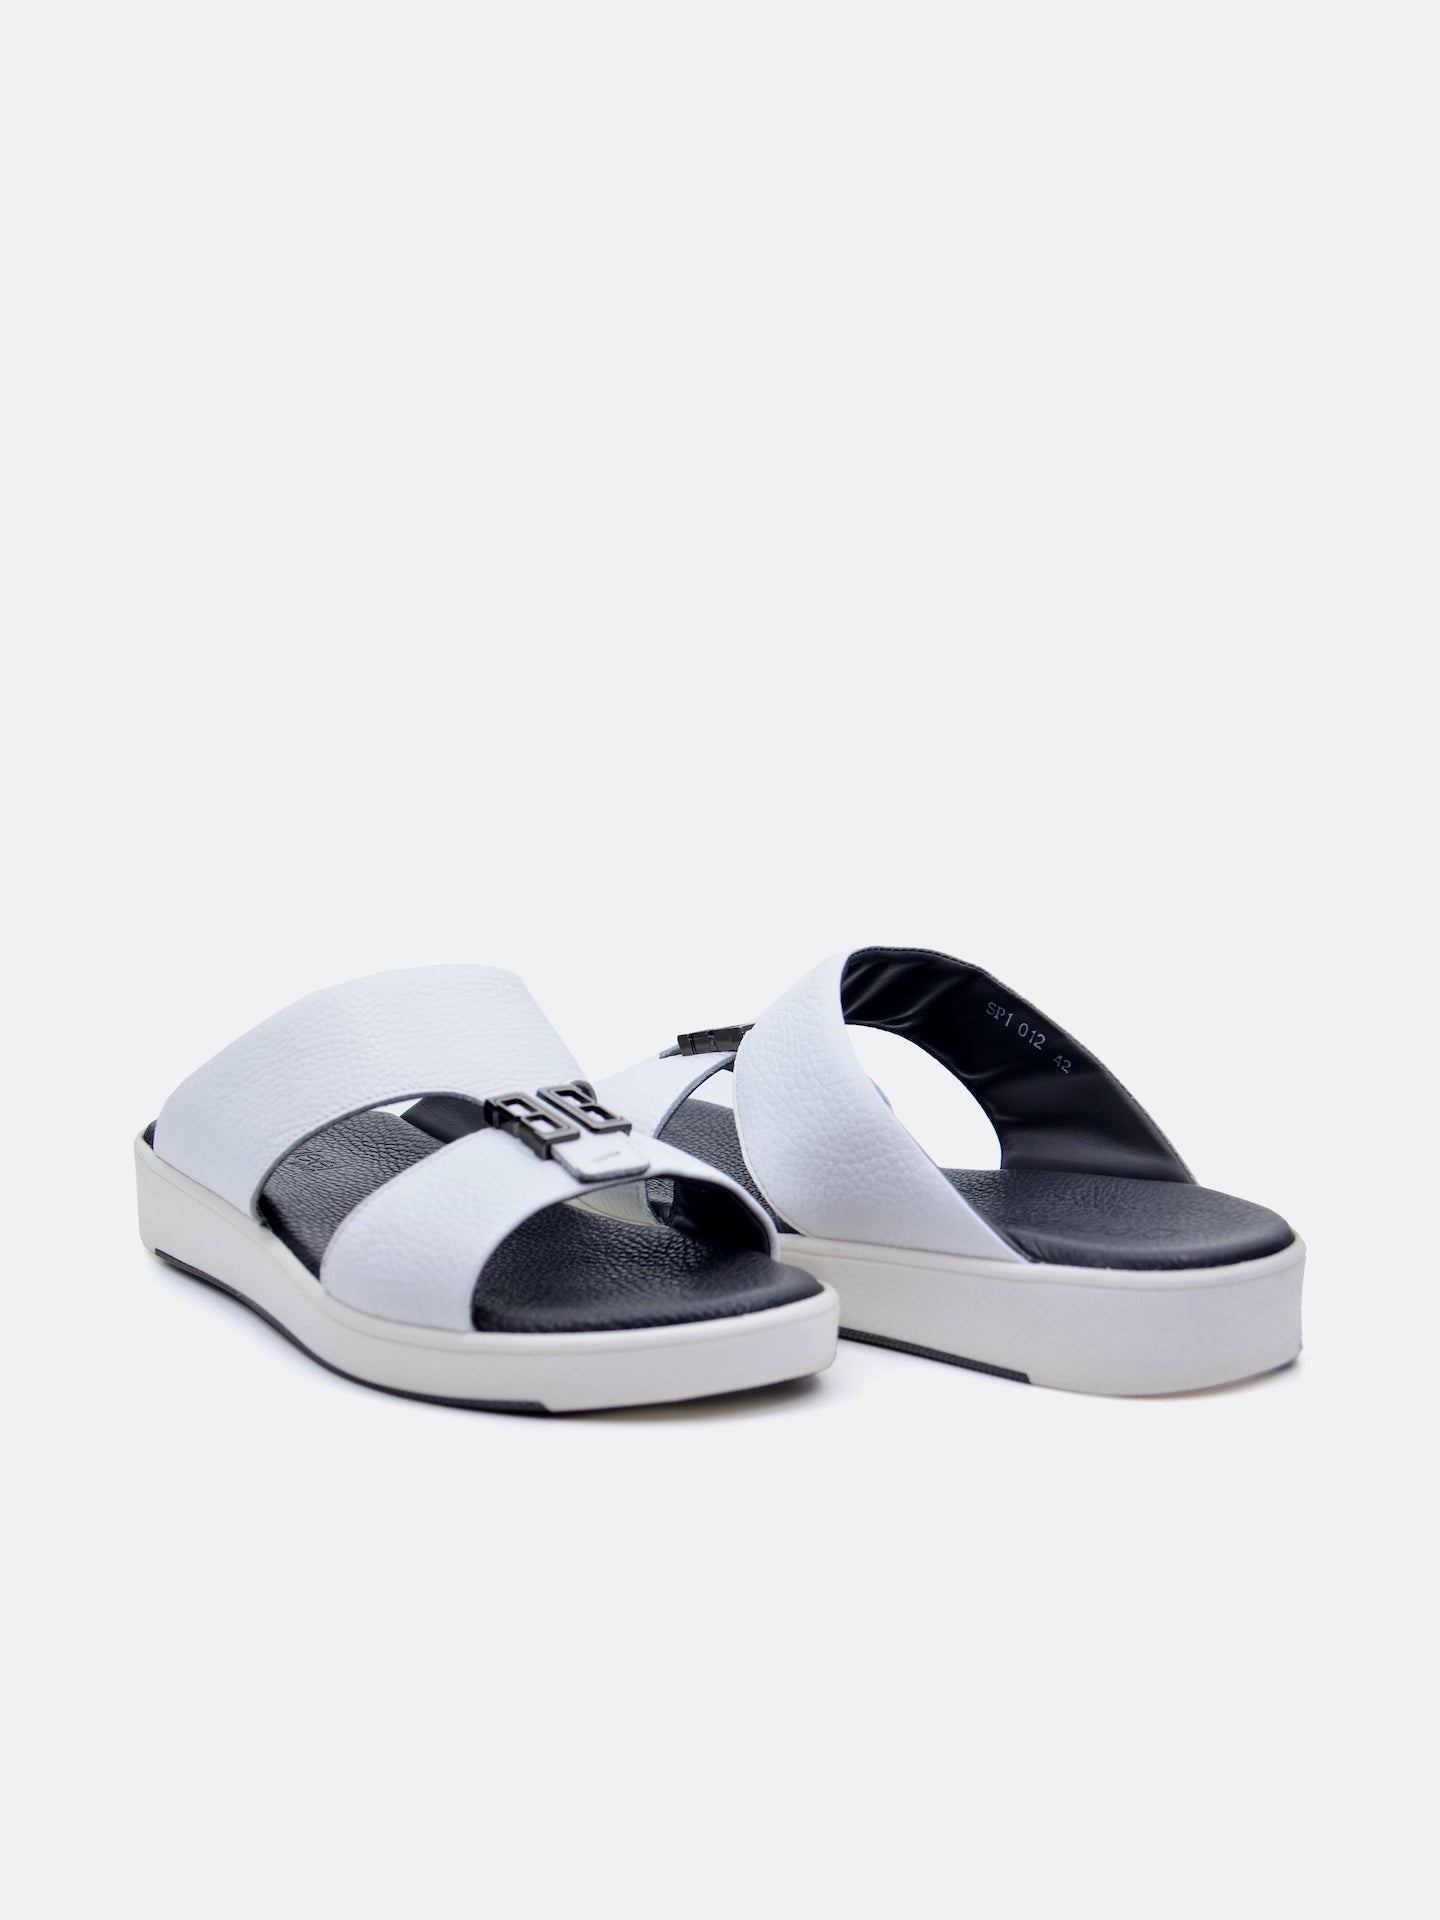 Barjeel Uno SP1-012 Boys Arabic Sandals #color_White